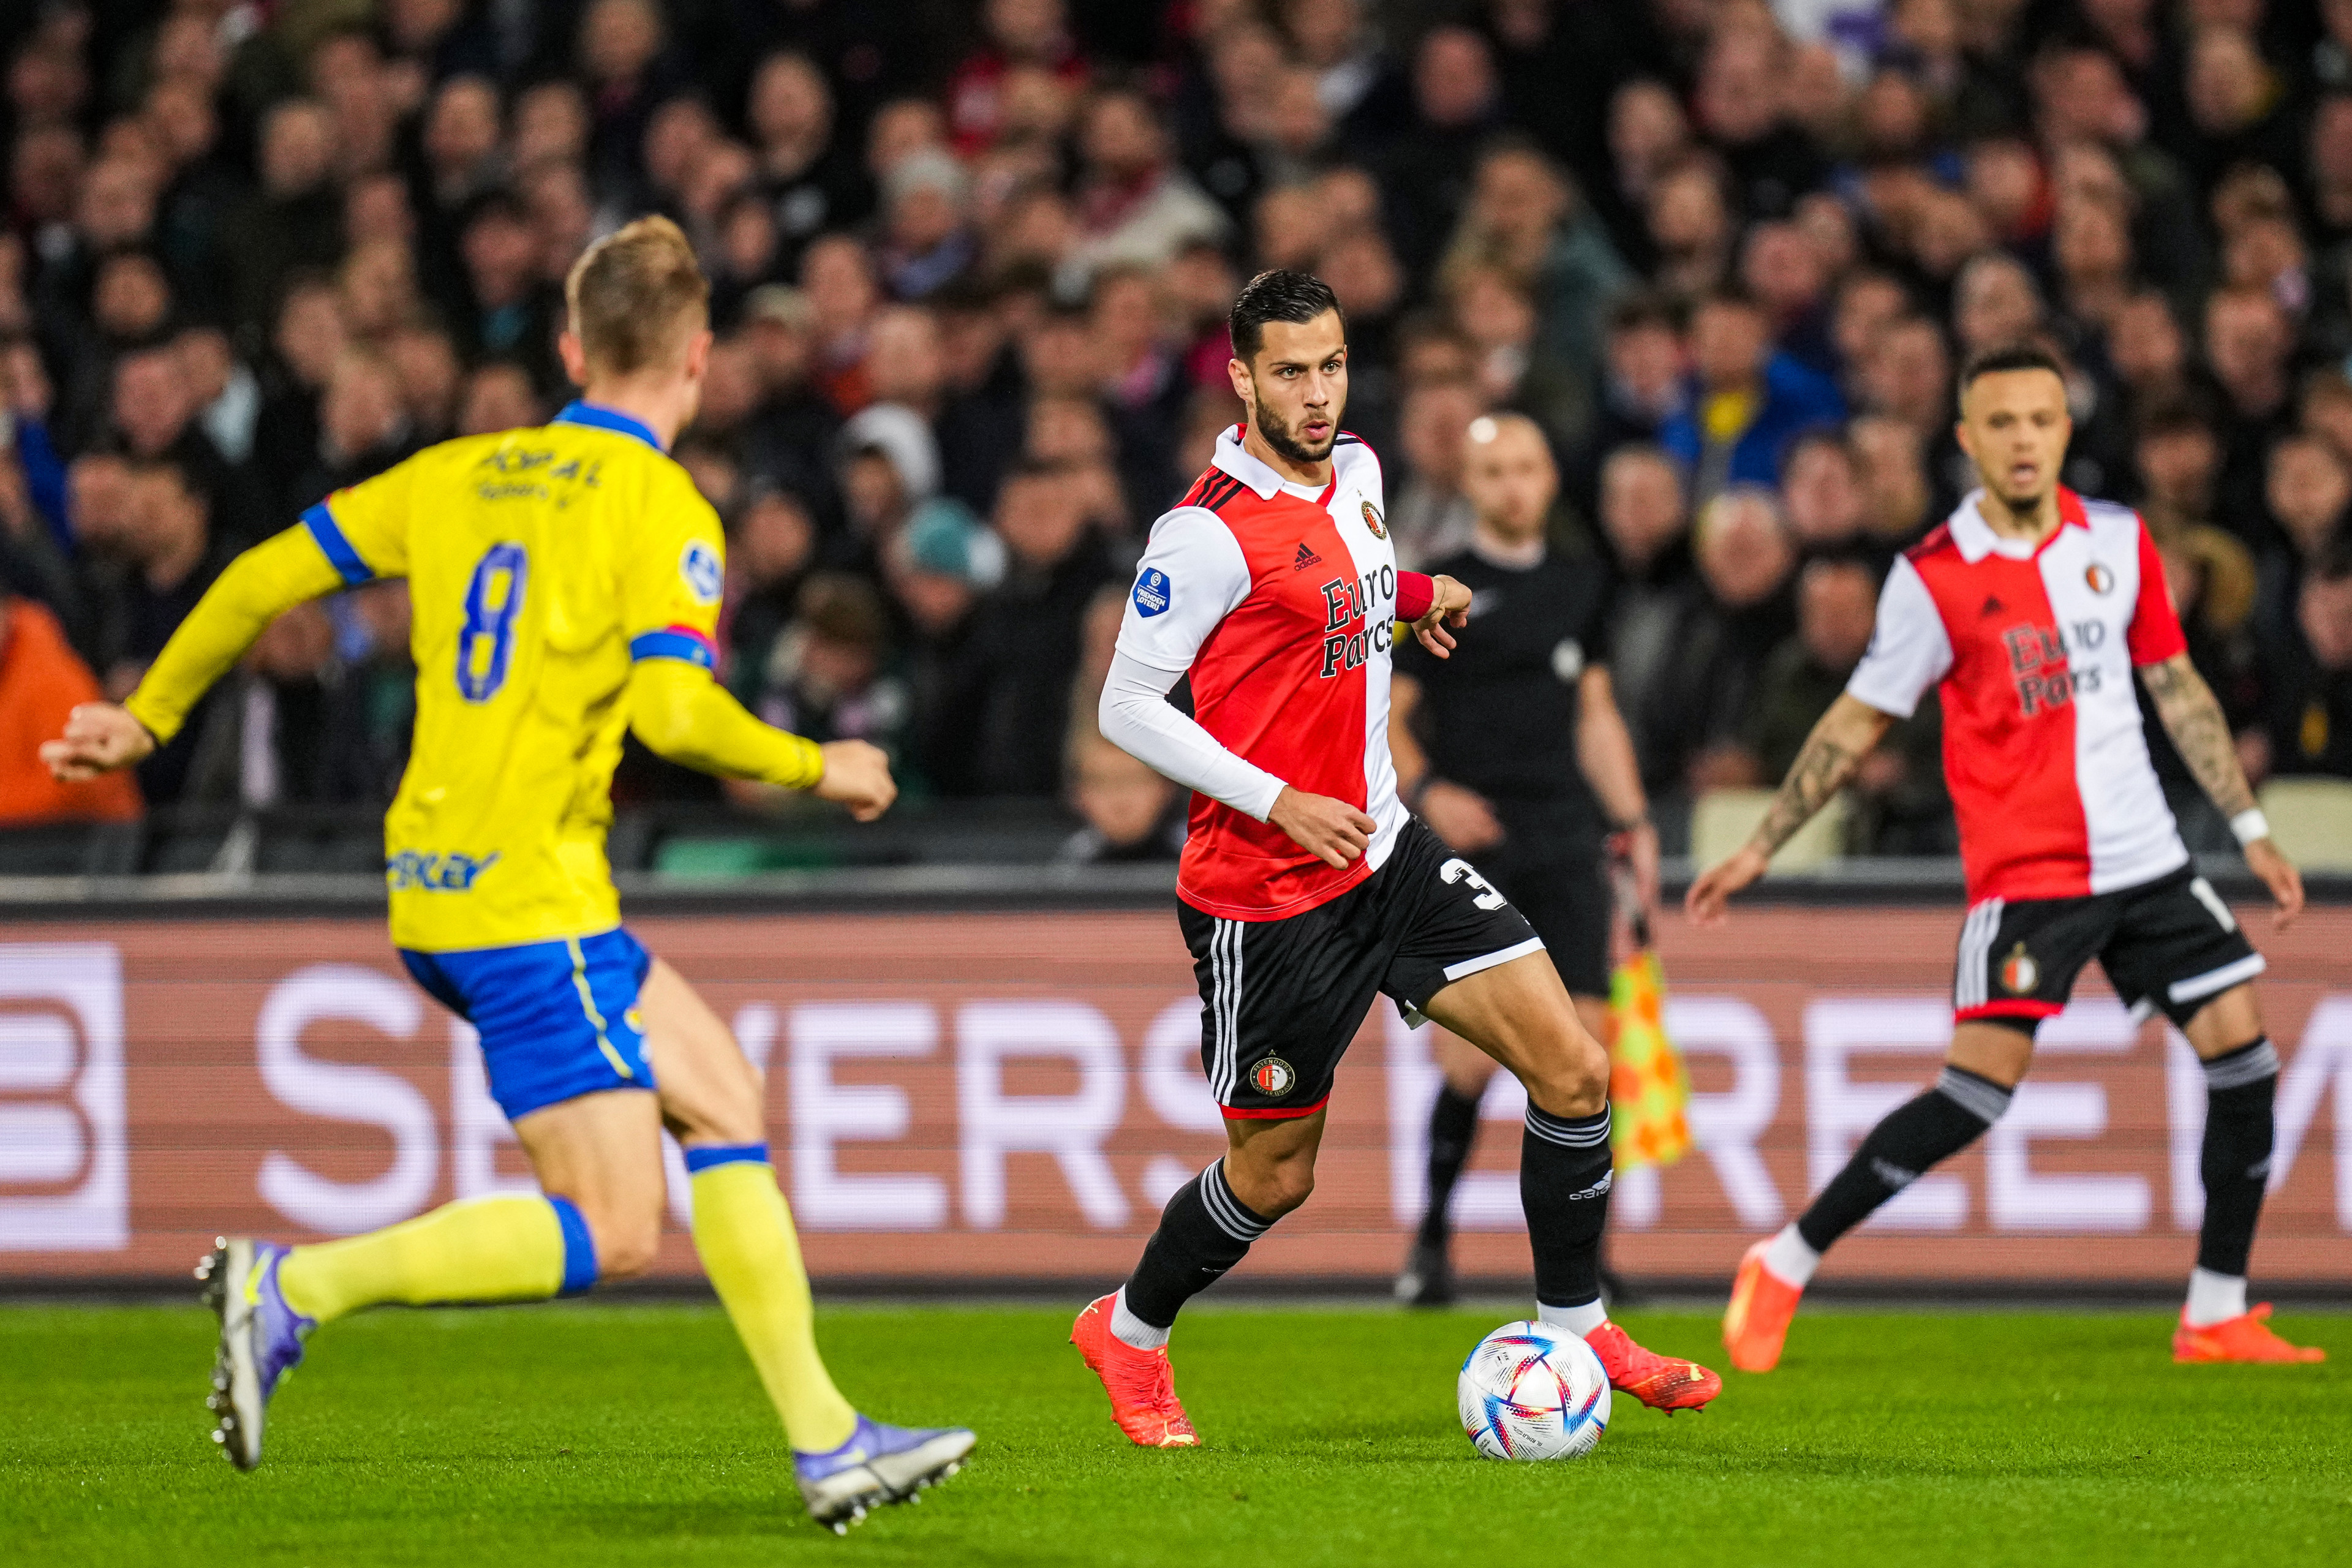 Feyenoord - SC Cambuur • 1-0 [FT]